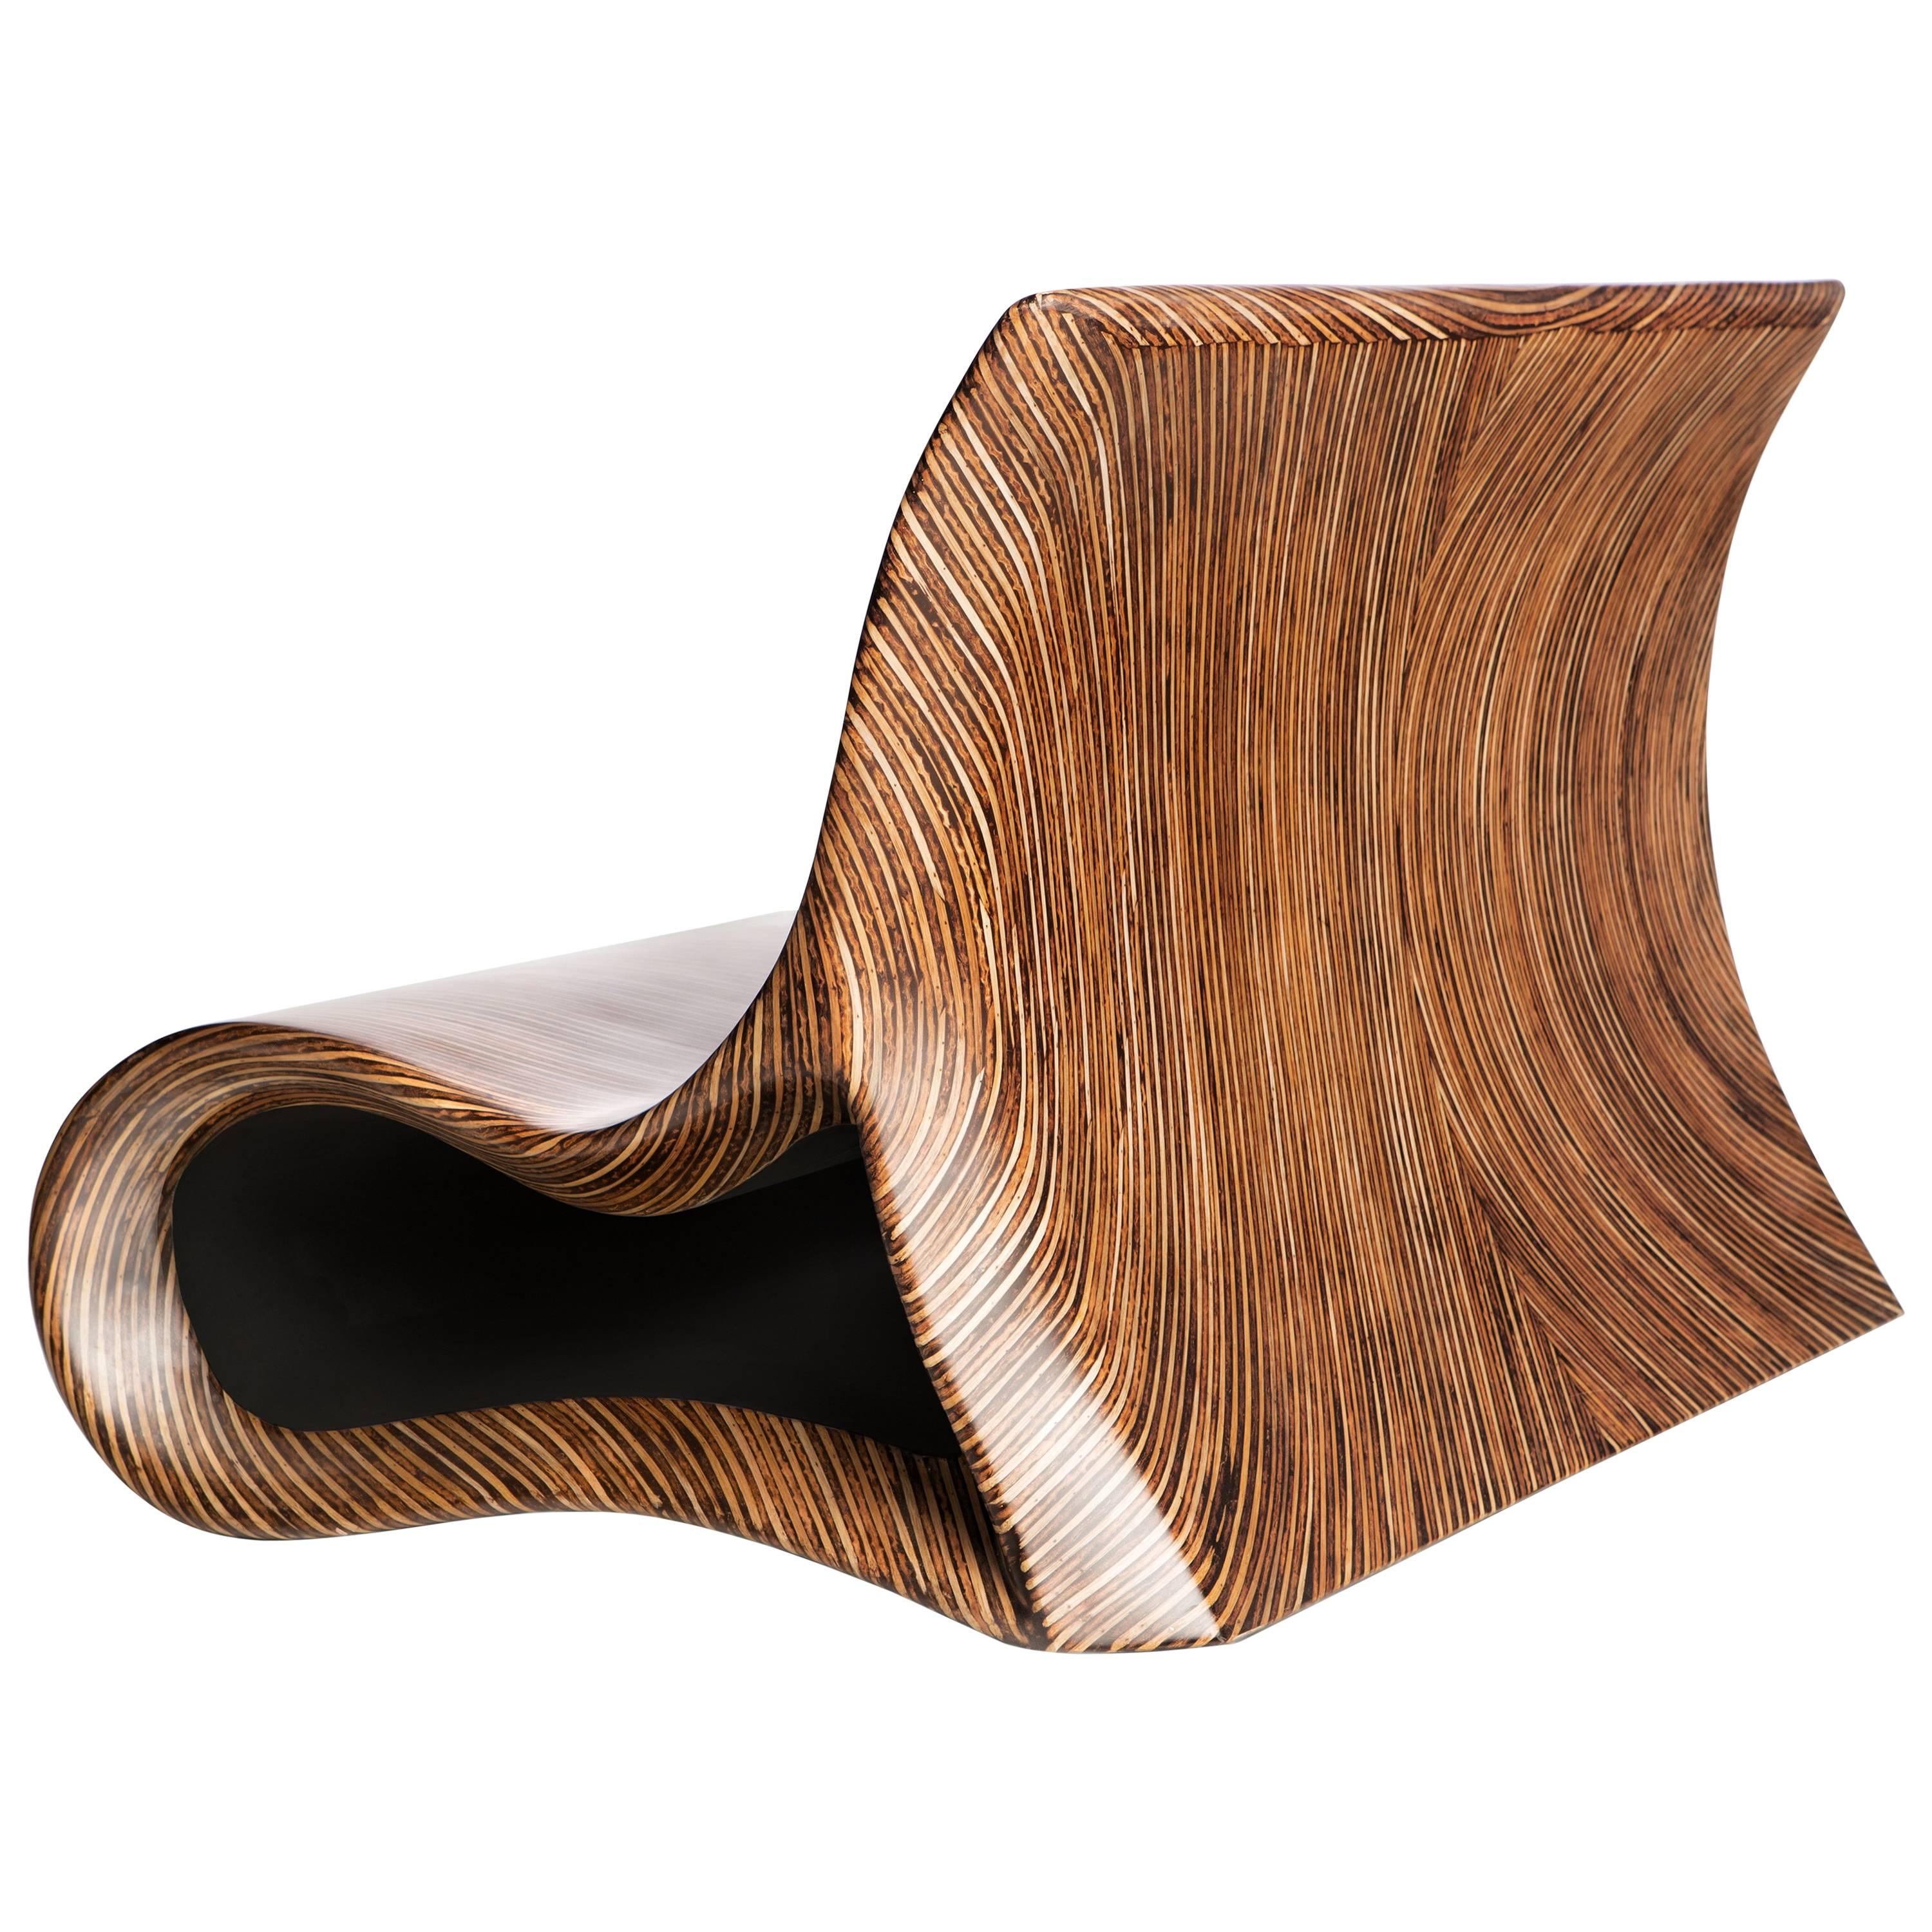 Modern Wooden Altoum Doubler Sofa Seater in Dark Finish Inspired by Op Art 2014 For Sale